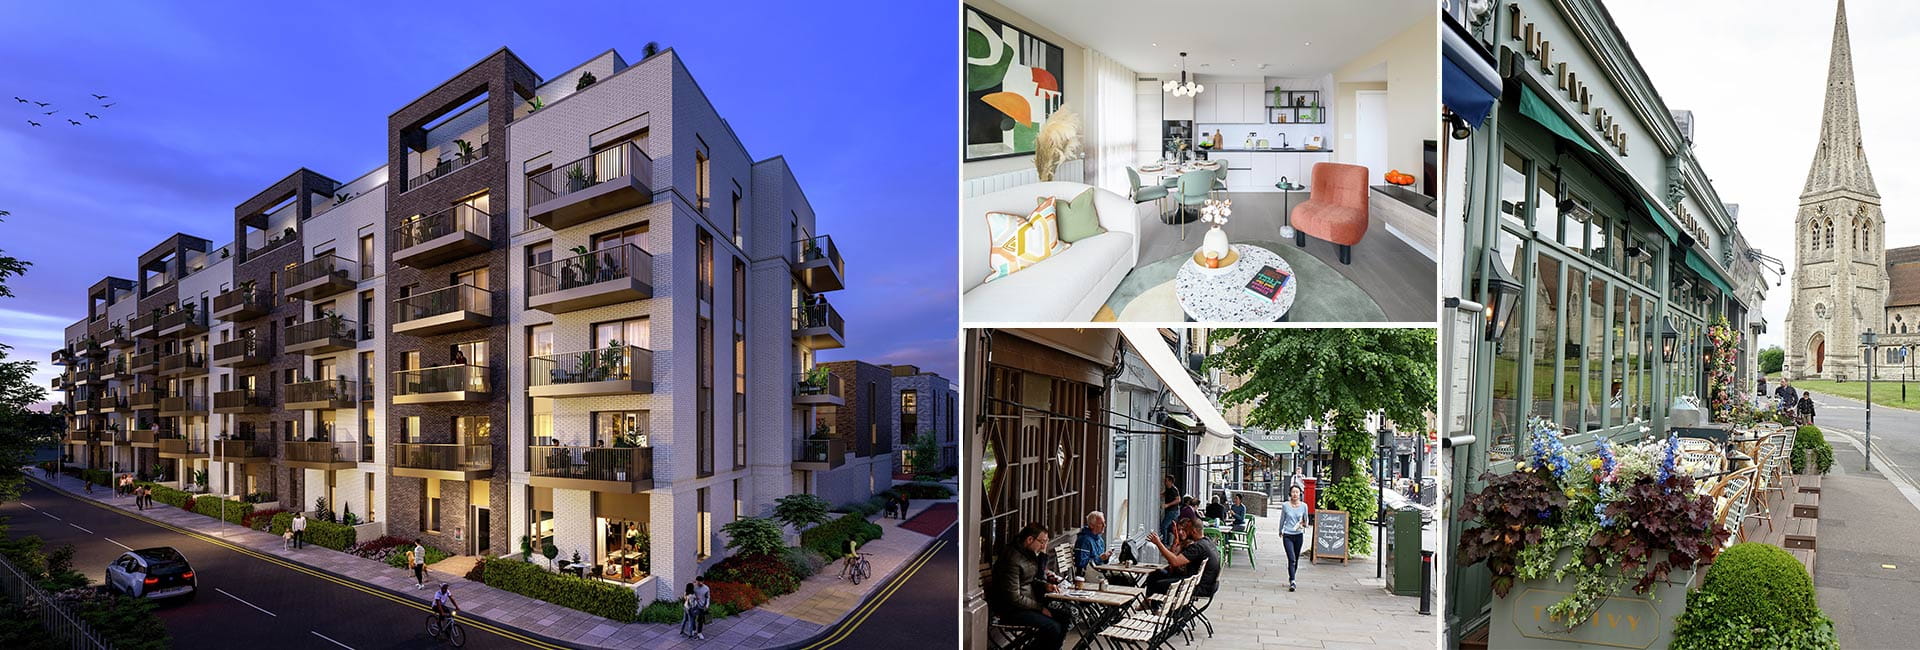 Berkeley, Kidbrooke Village, Apartments &amp; Podium Houses, Header